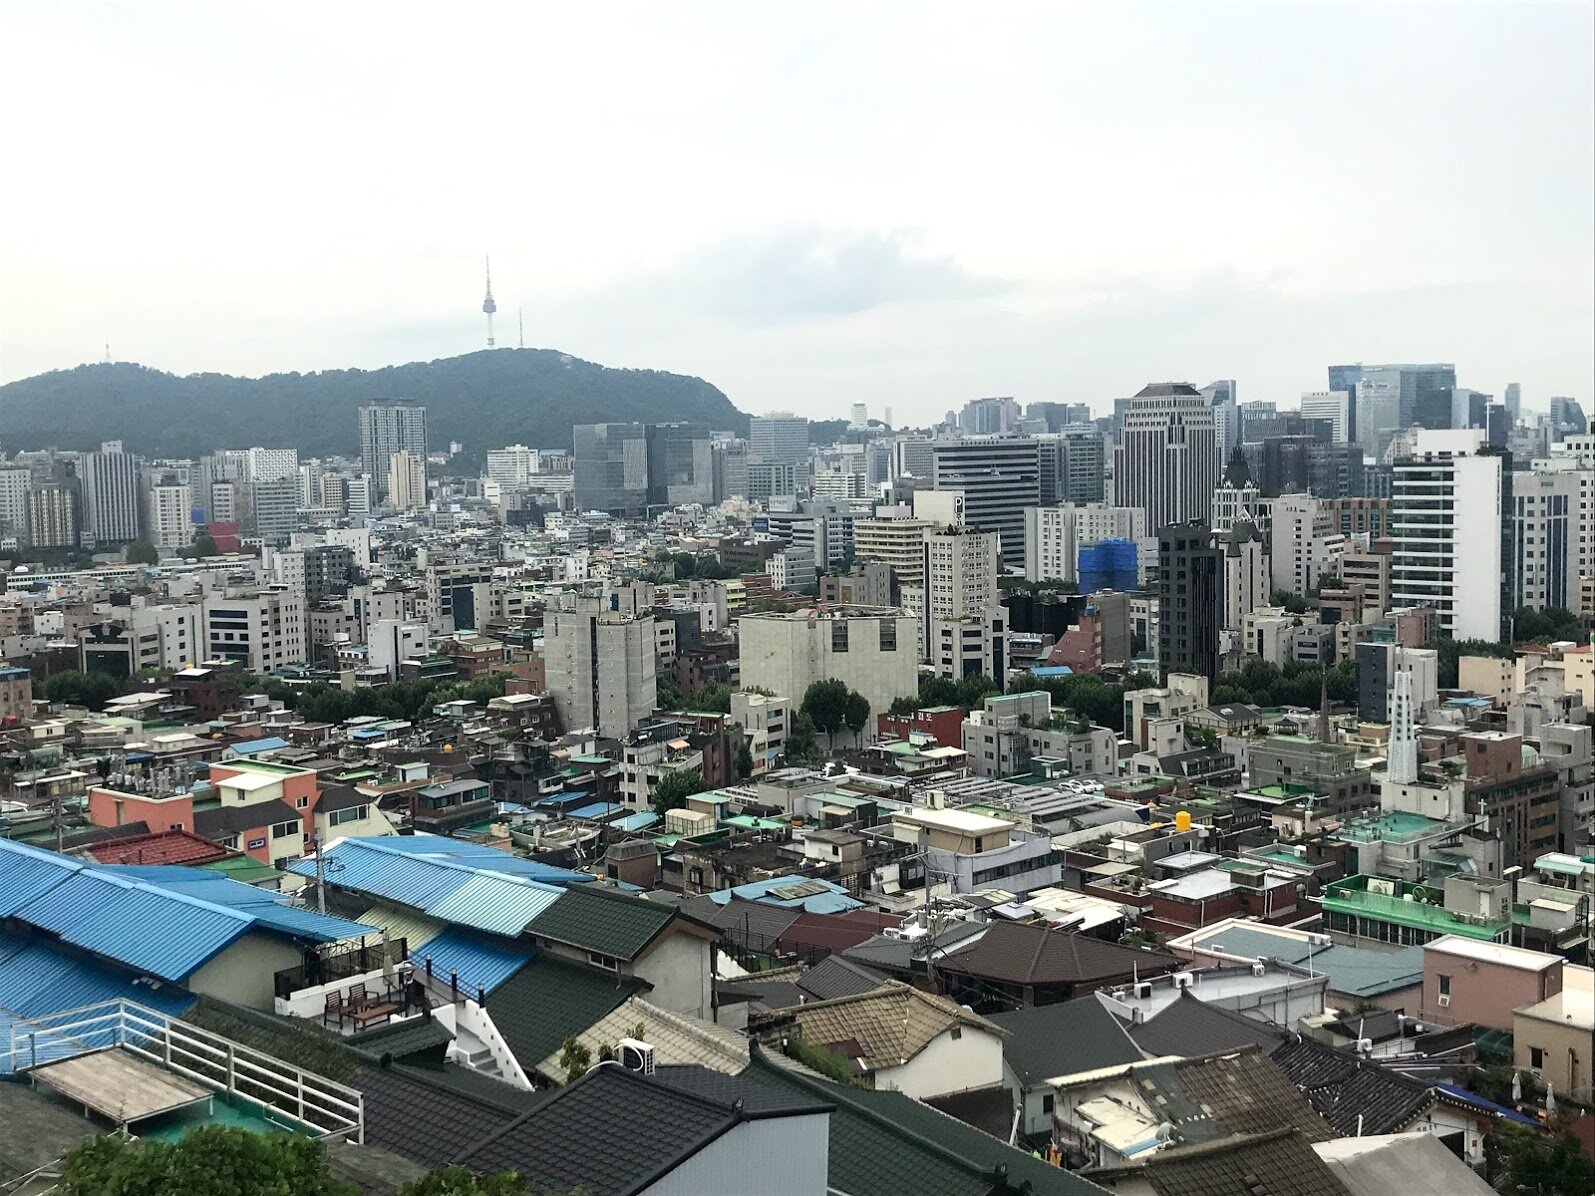 Seoul cityline from Ihwa Mural Village in Seoul, South Korea